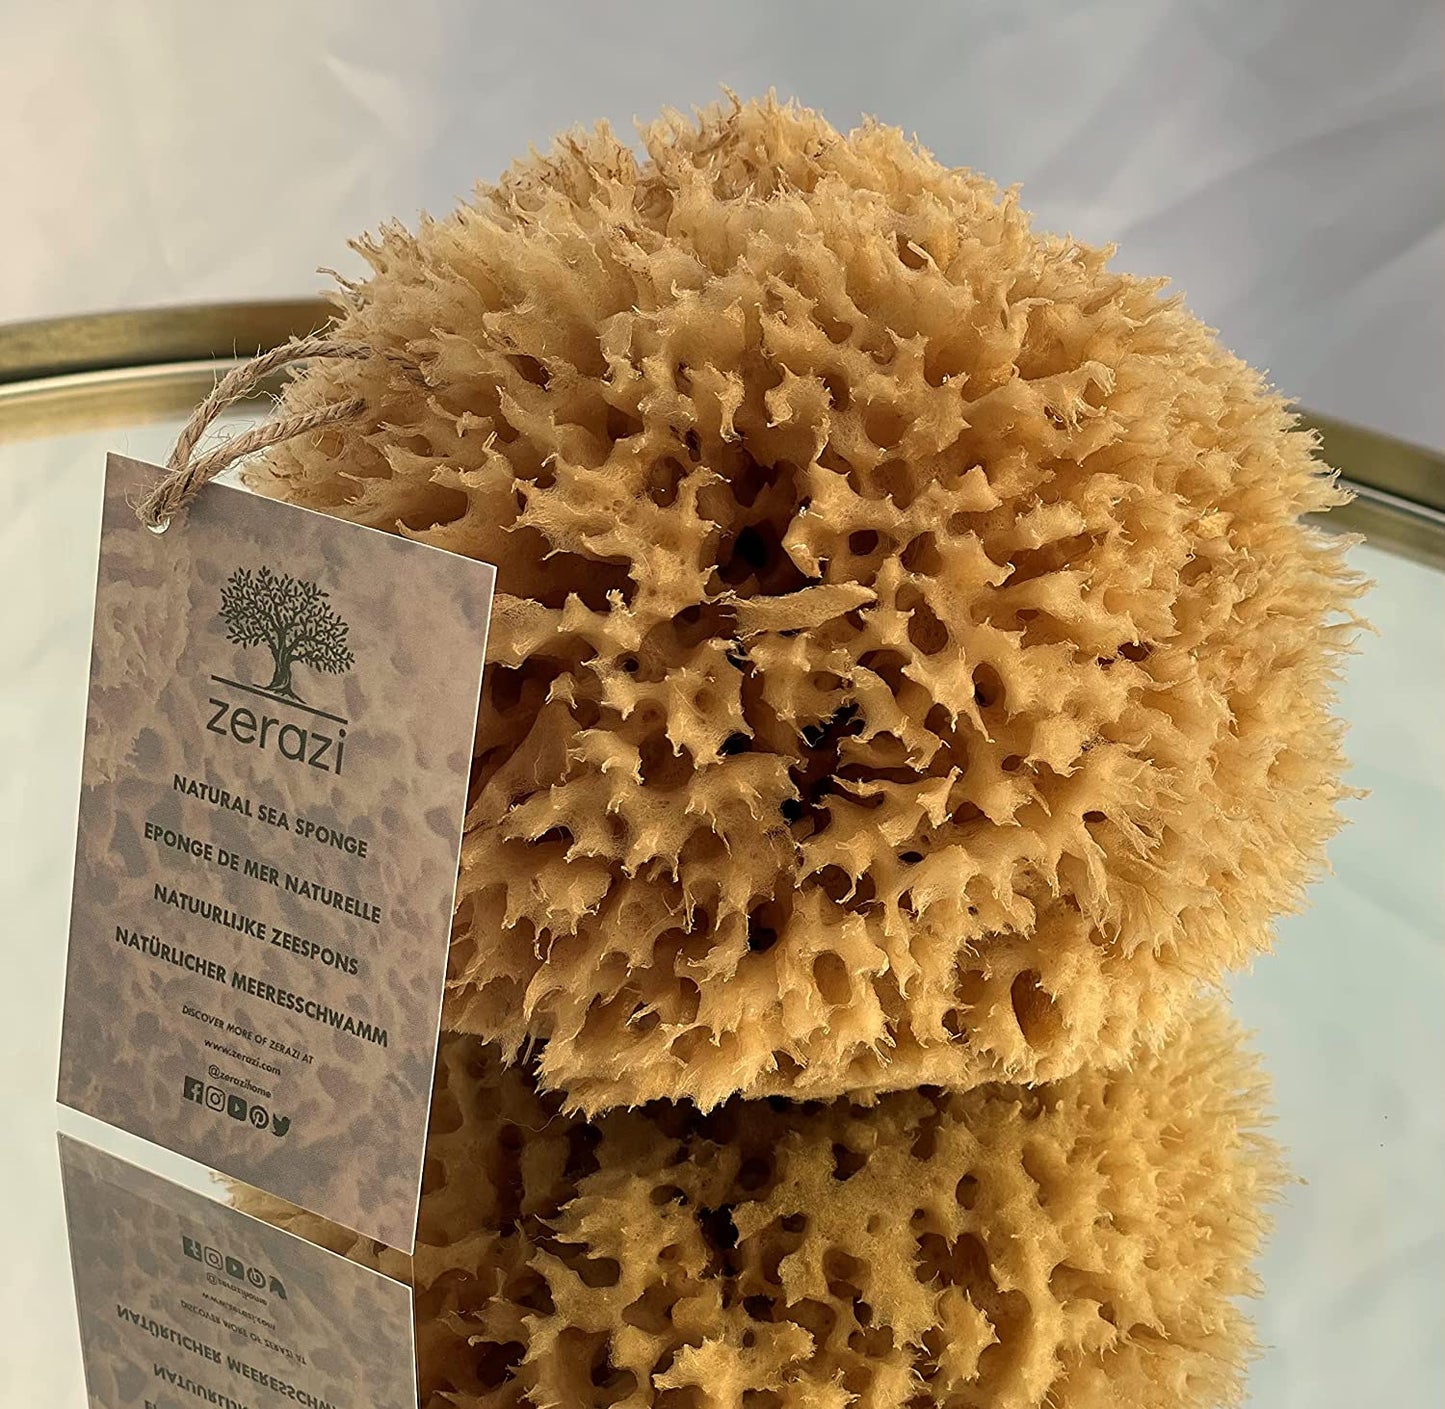 Zerazi | Natural Sea Sponge | 15-16cm | Hygienic | From responsible culture